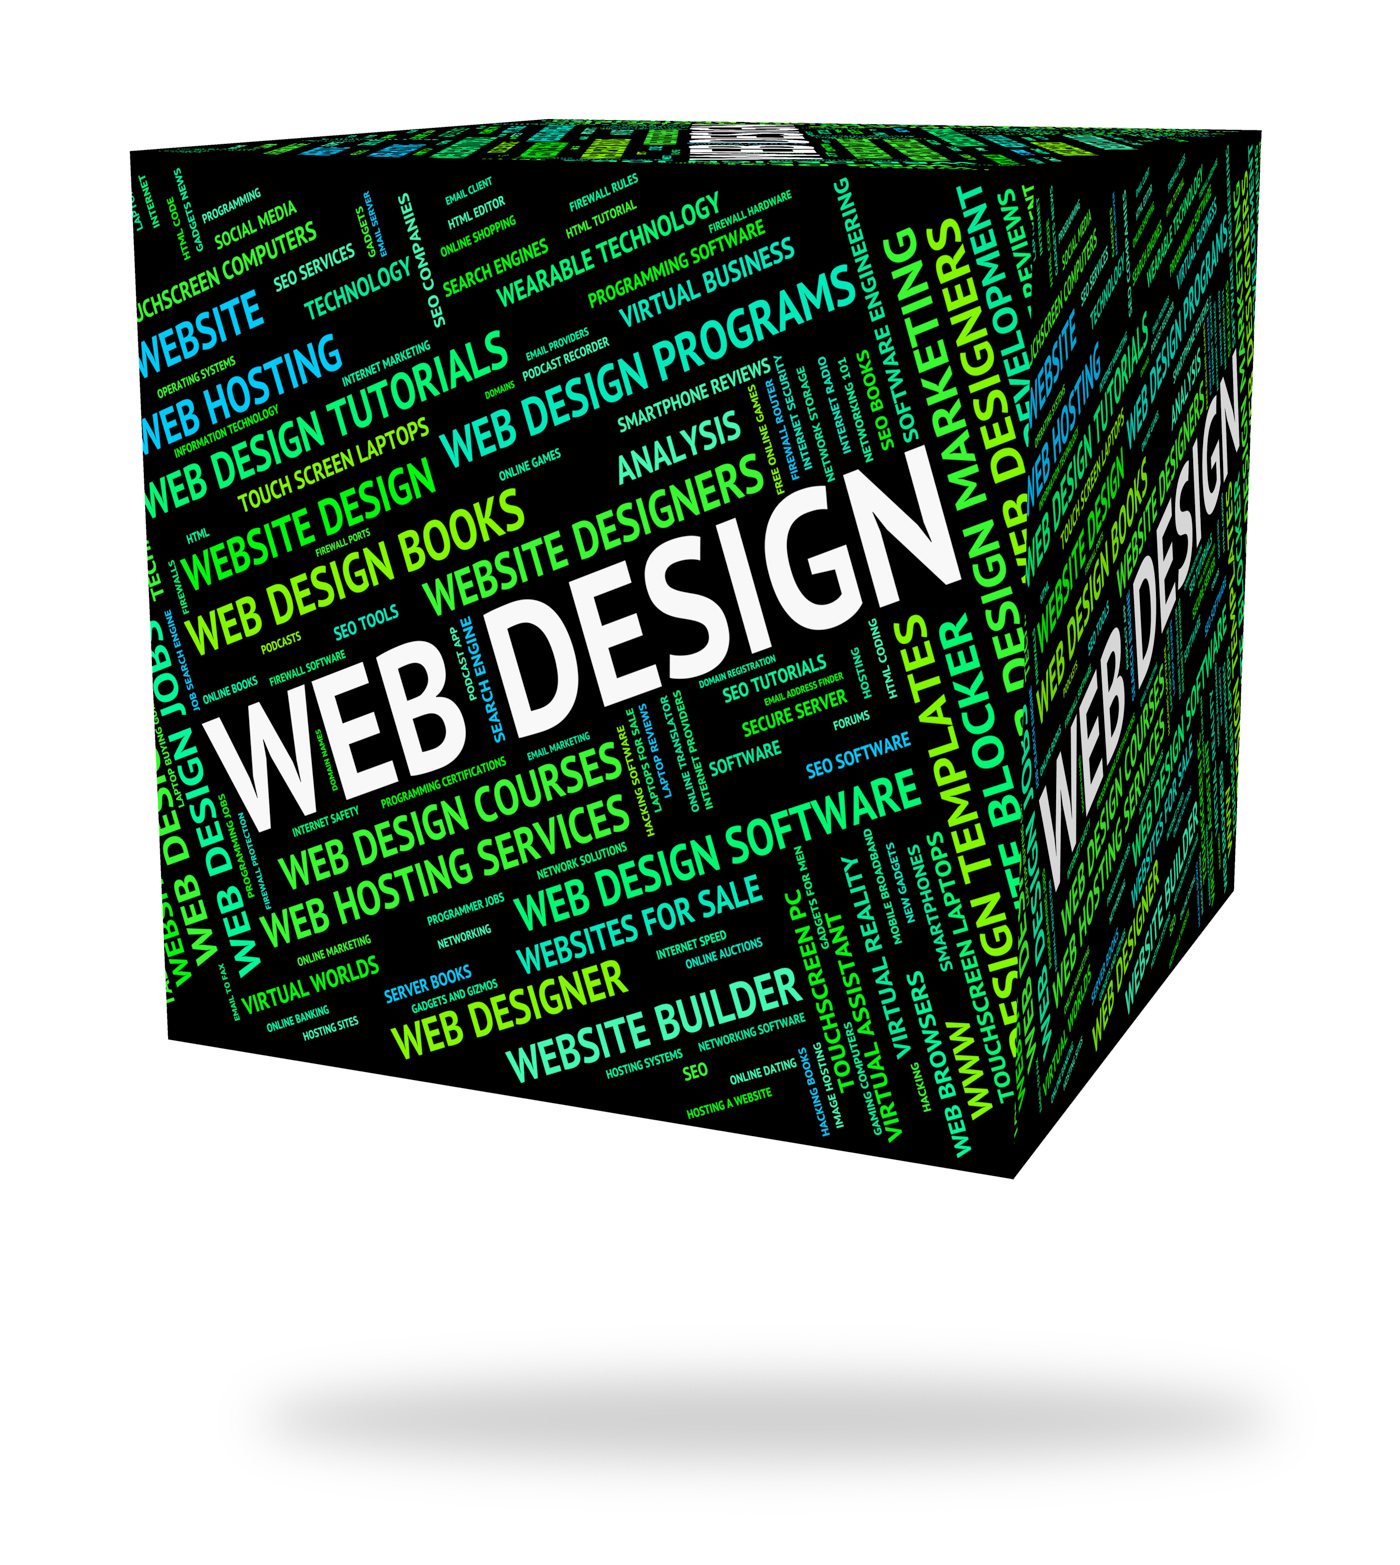 Web design represents word designers and websites photo